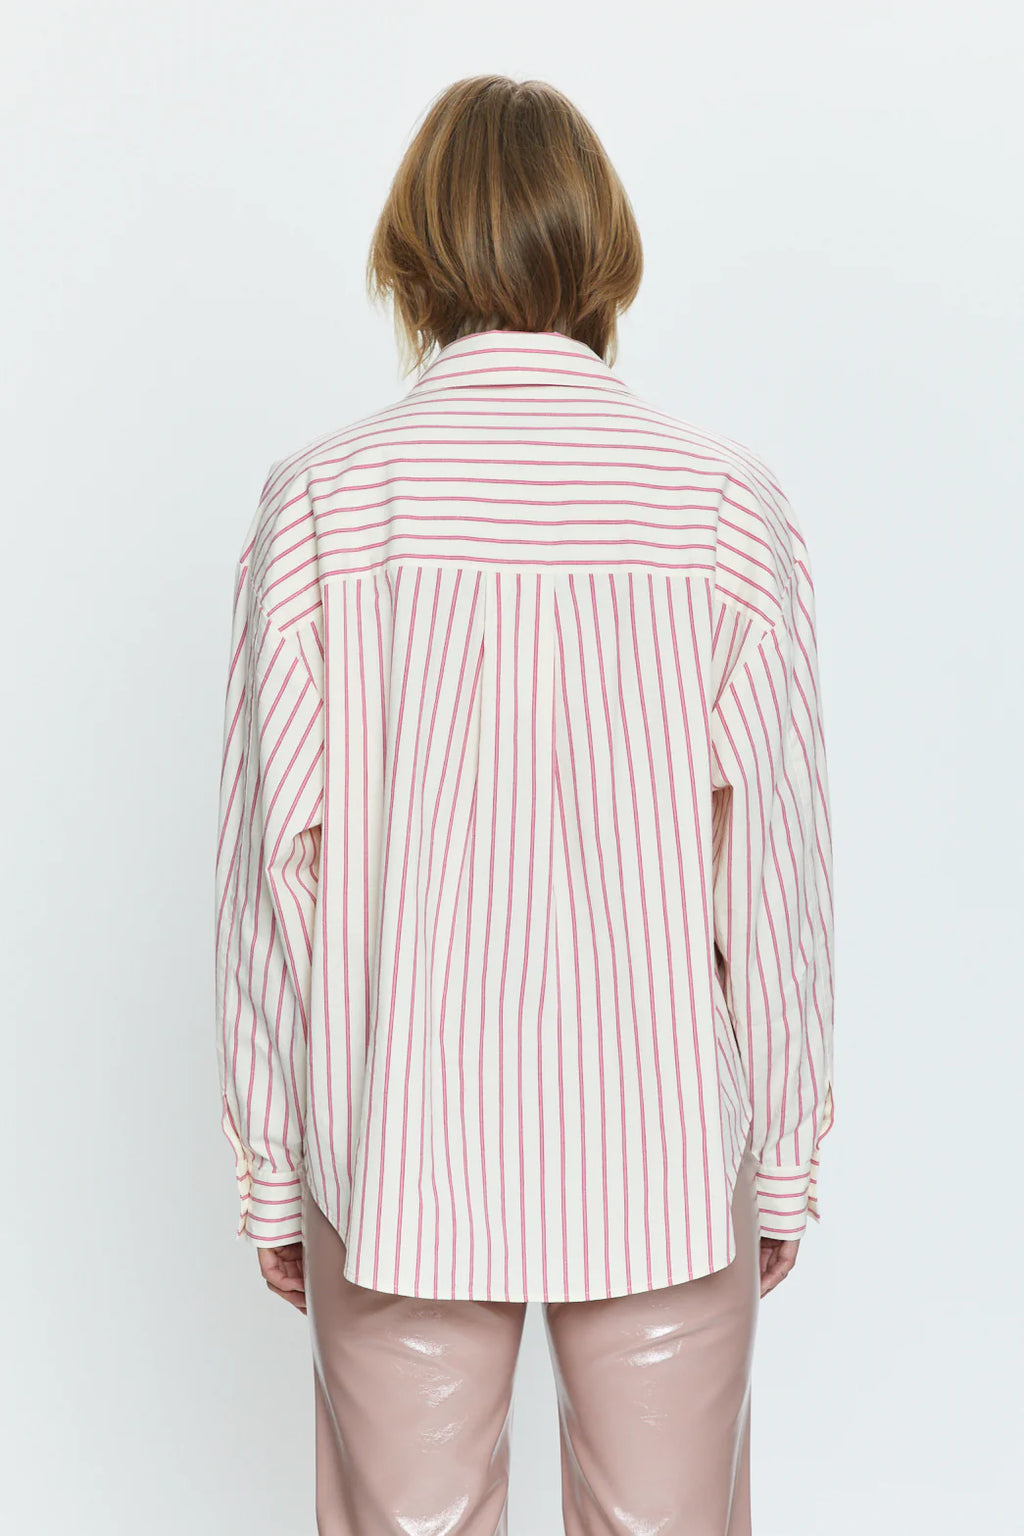 Sloane Oversized Button Down Shirt- Rose Multi Stripe